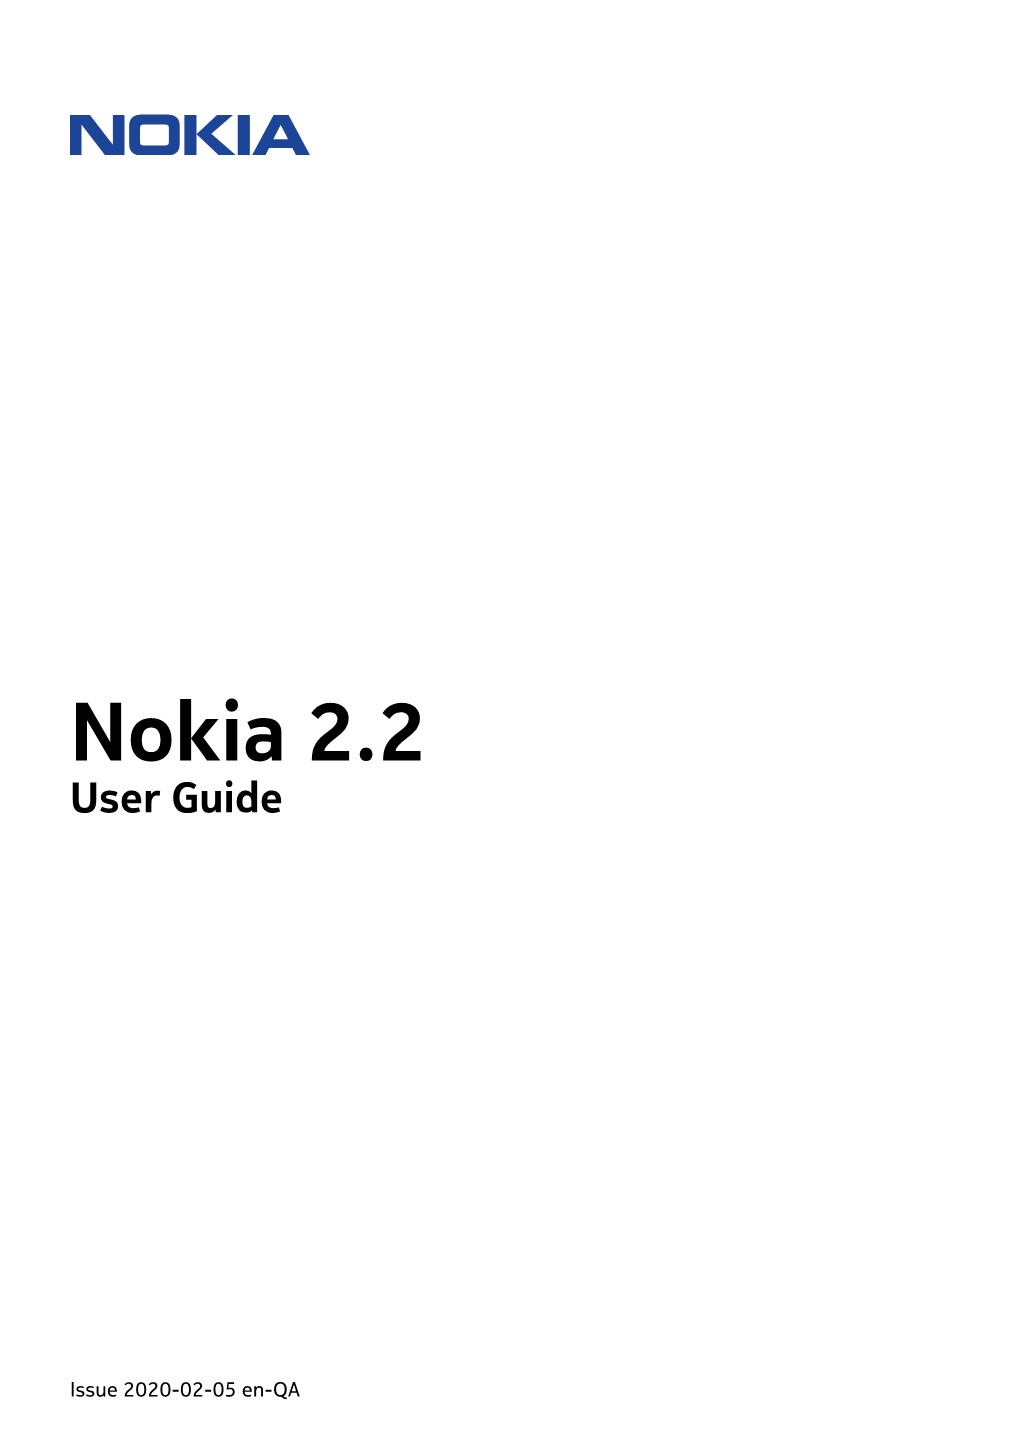 Nokia 2.2 User Guide Pdfdisplaydoctitle=True Pdflang=En